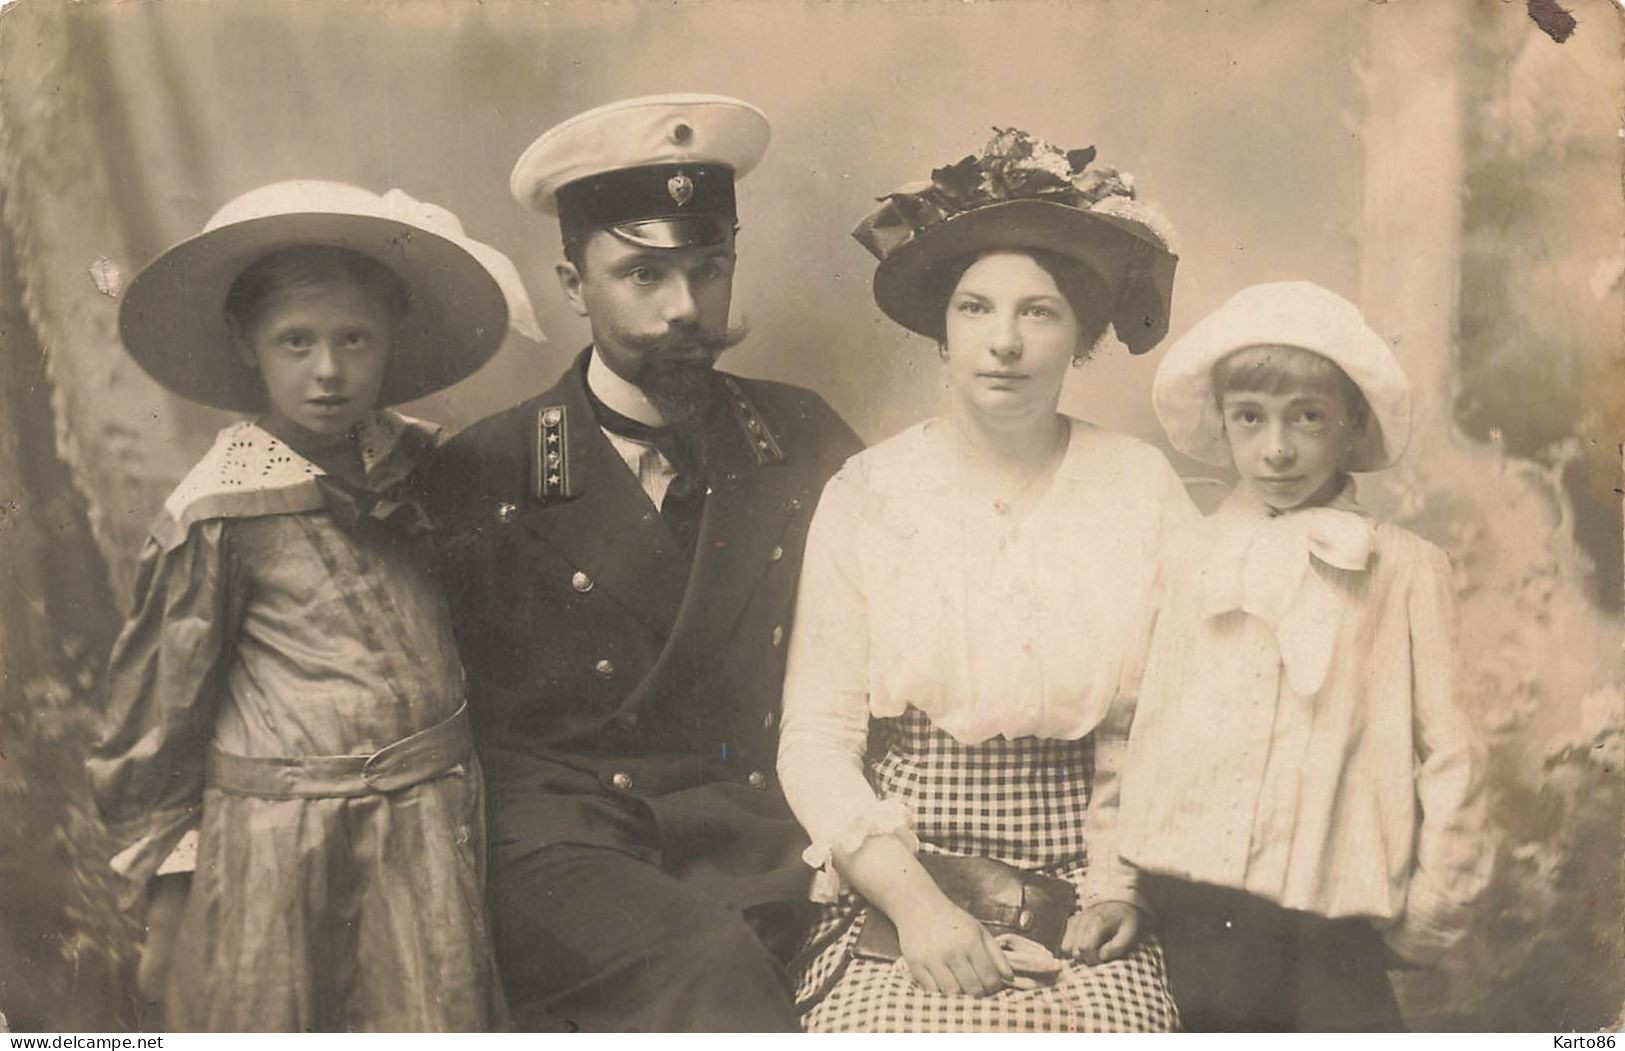 Russia * Carte Photo * Famille Royale * Tsar Tsarine Enfants * Russie Russe * Royauté Royalty - Familles Royales